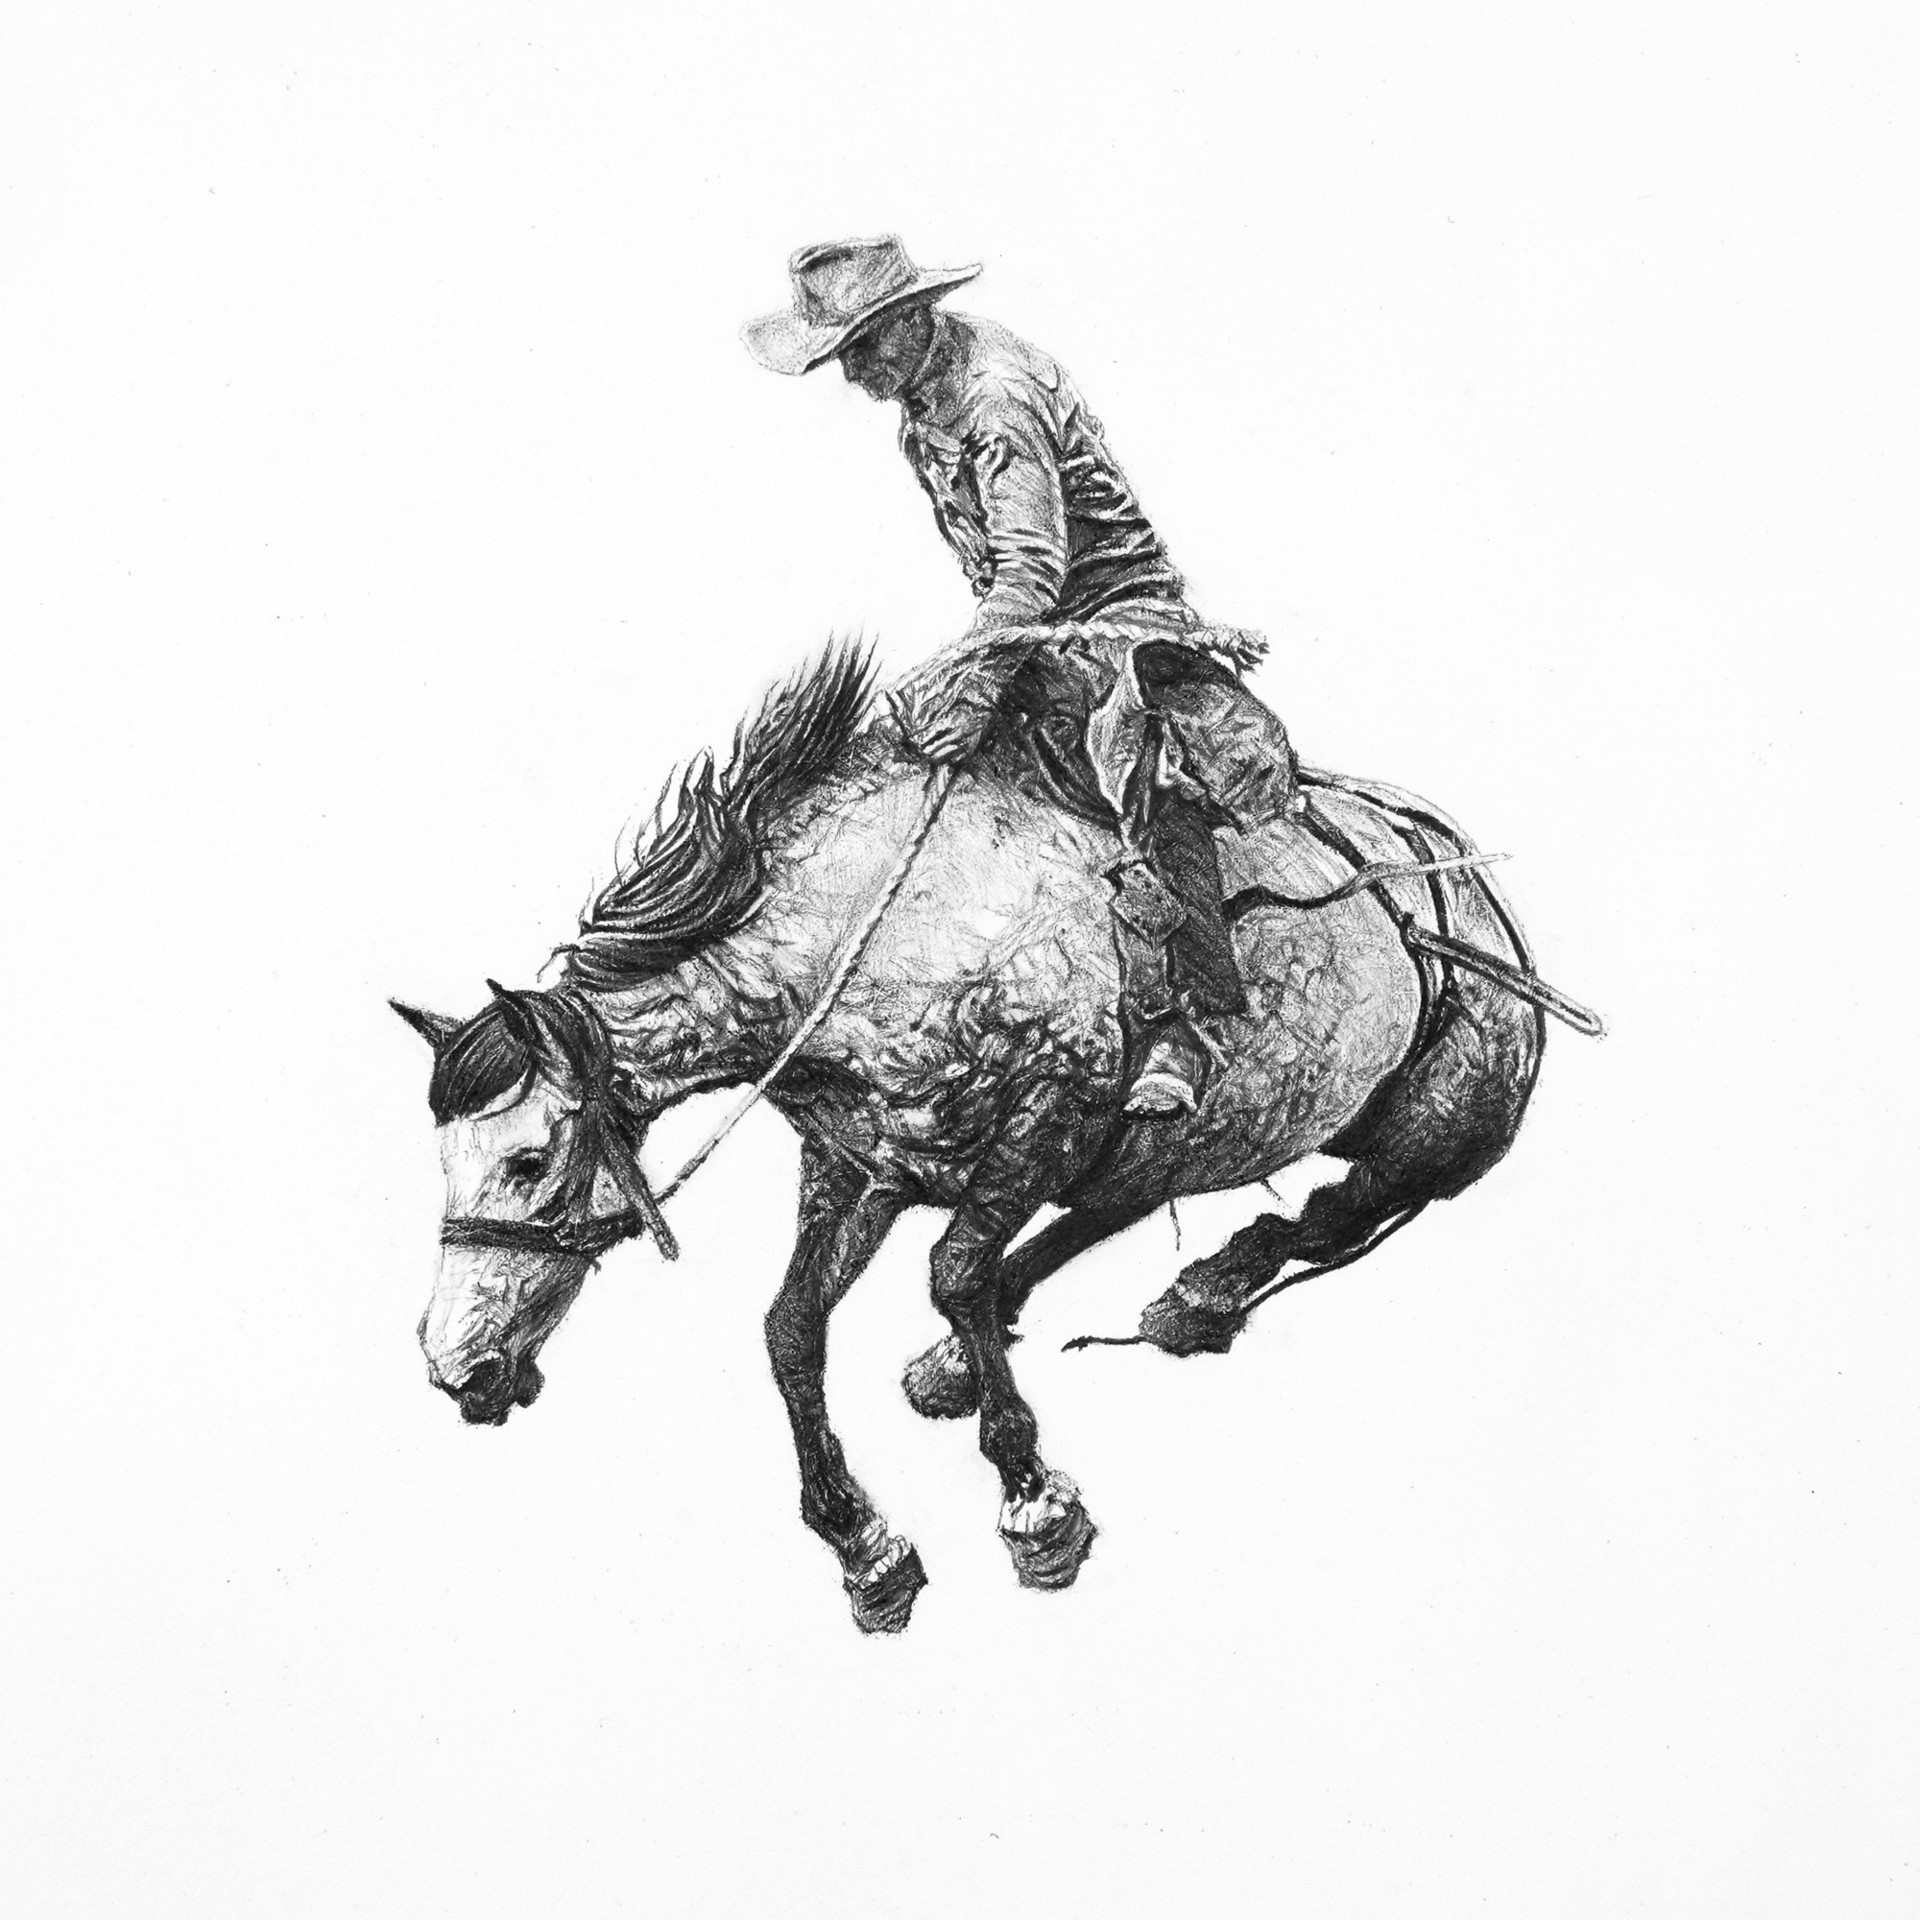 Untitled (bronc rider)-5043 by Clayton Porter